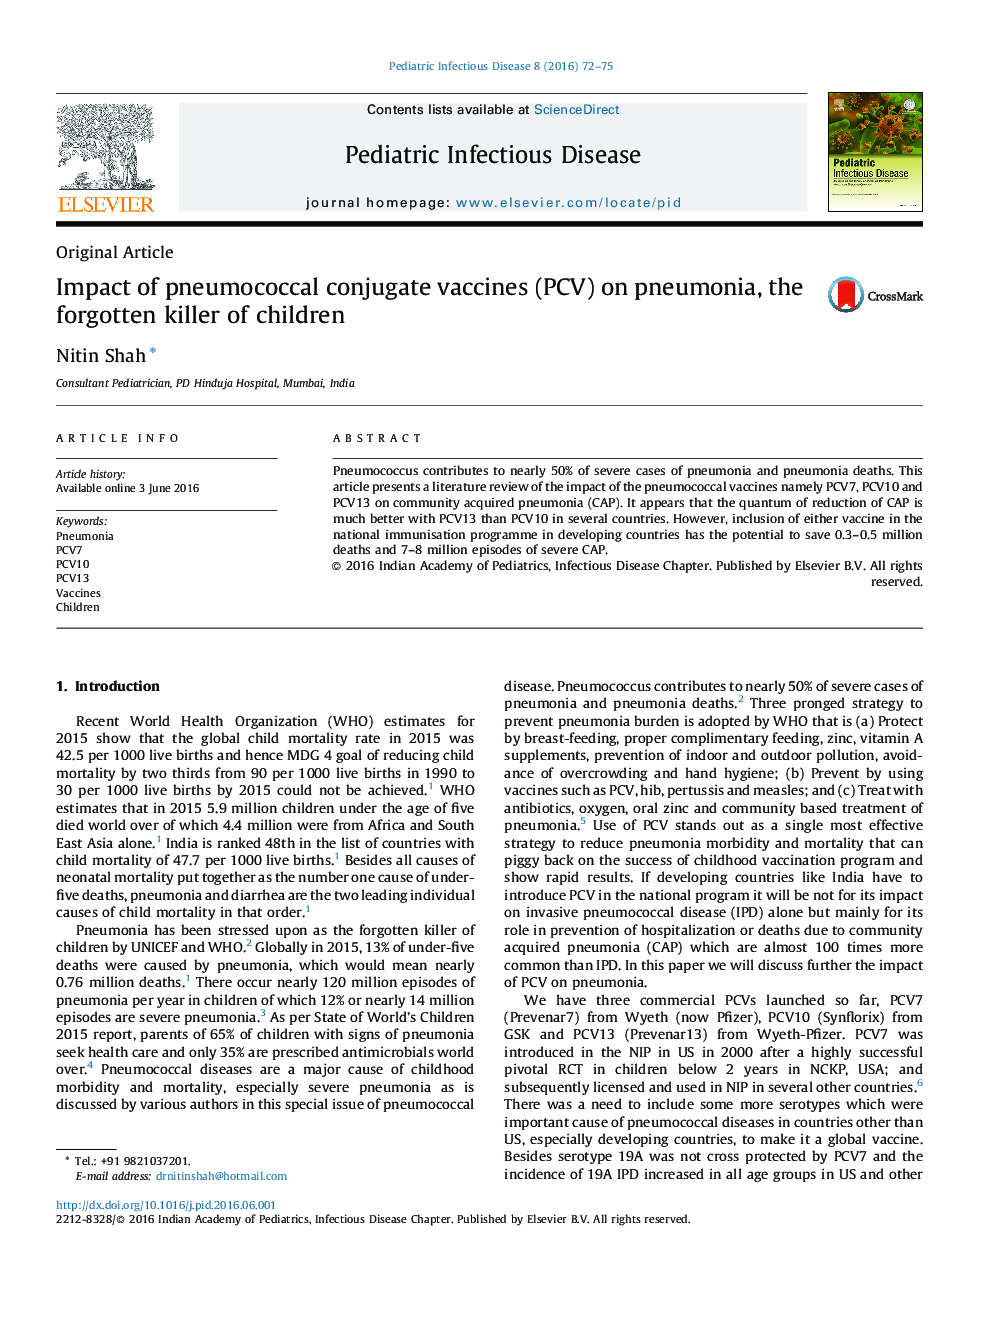 Impact of pneumococcal conjugate vaccines (PCV) on pneumonia, the forgotten killer of children